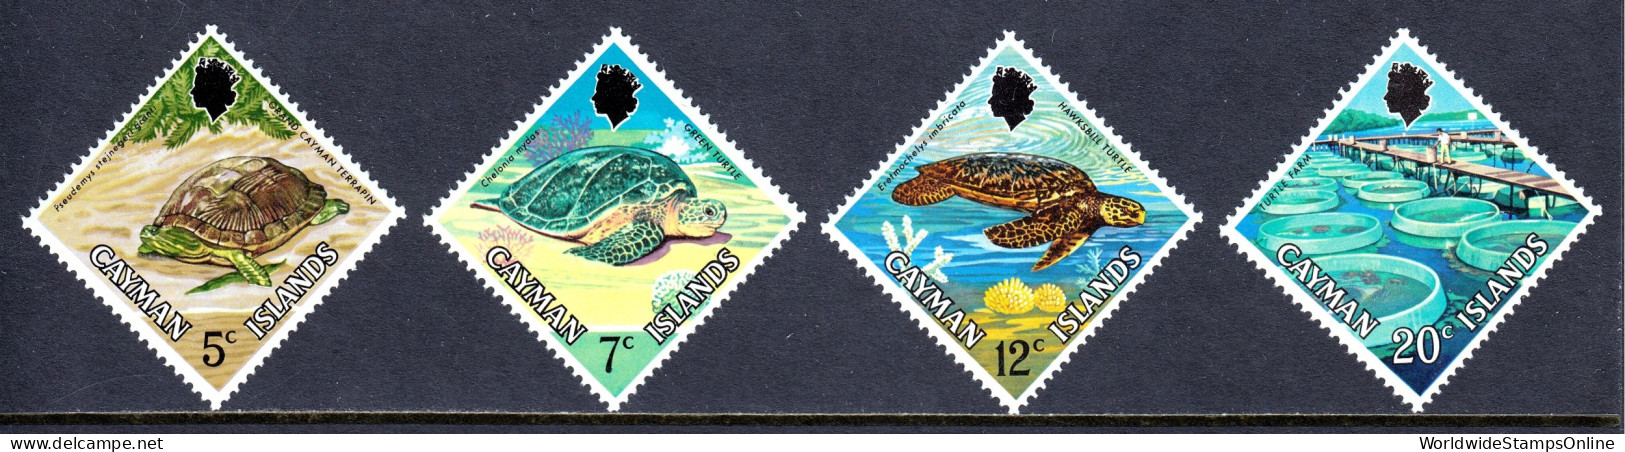 Cayman Islands - Scott #283-286 - MNH - SCV $6.30 - Caimán (Islas)